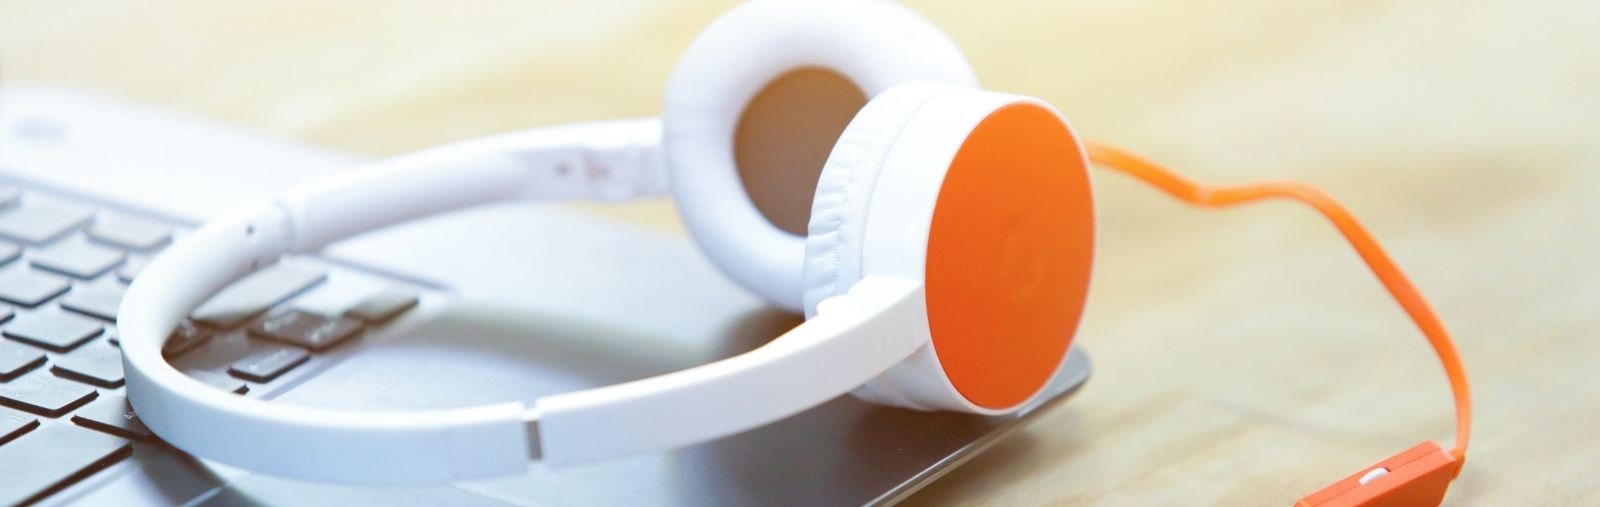 A pair of orange headphones on a laptop